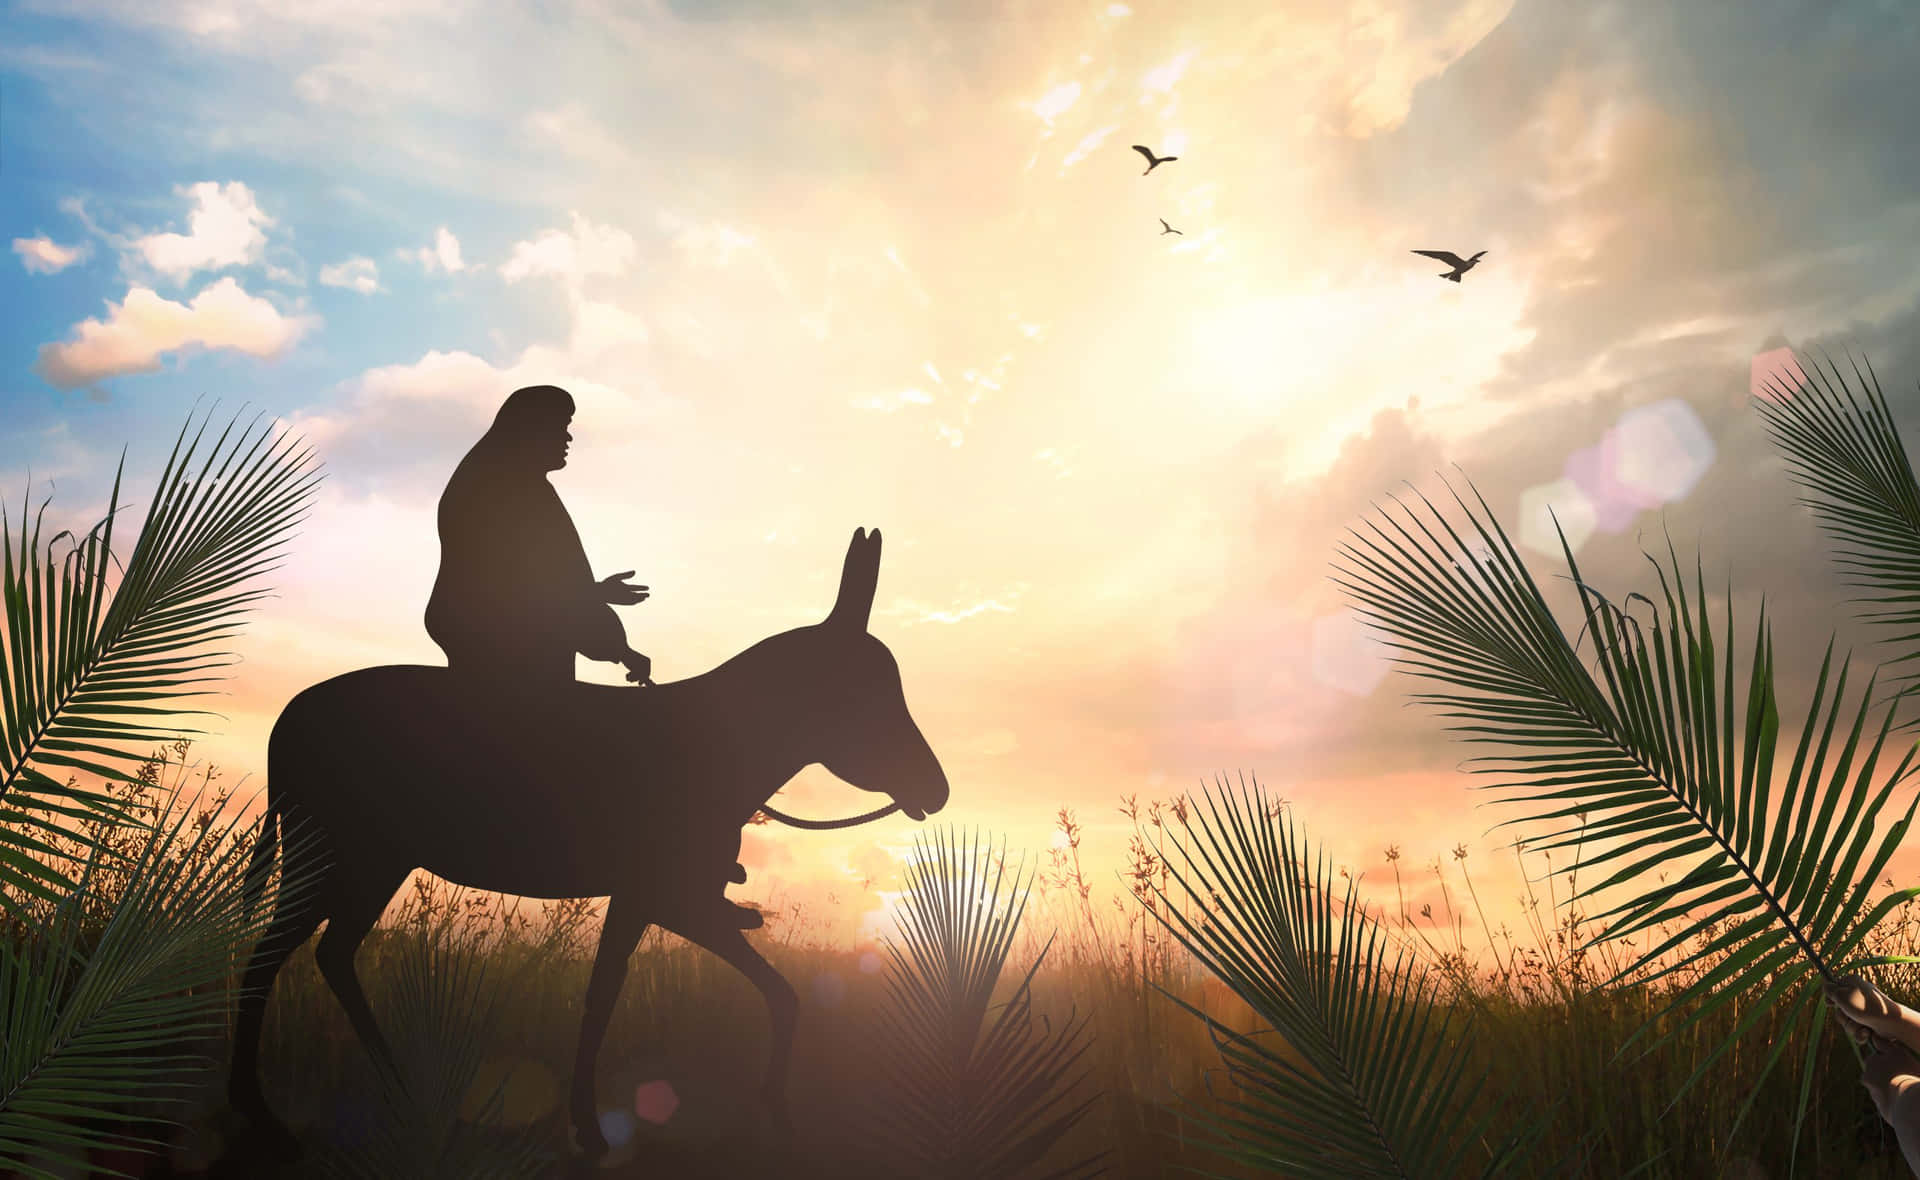 Jesus Christ On Donkey Silhouette For Palm Sunday Background